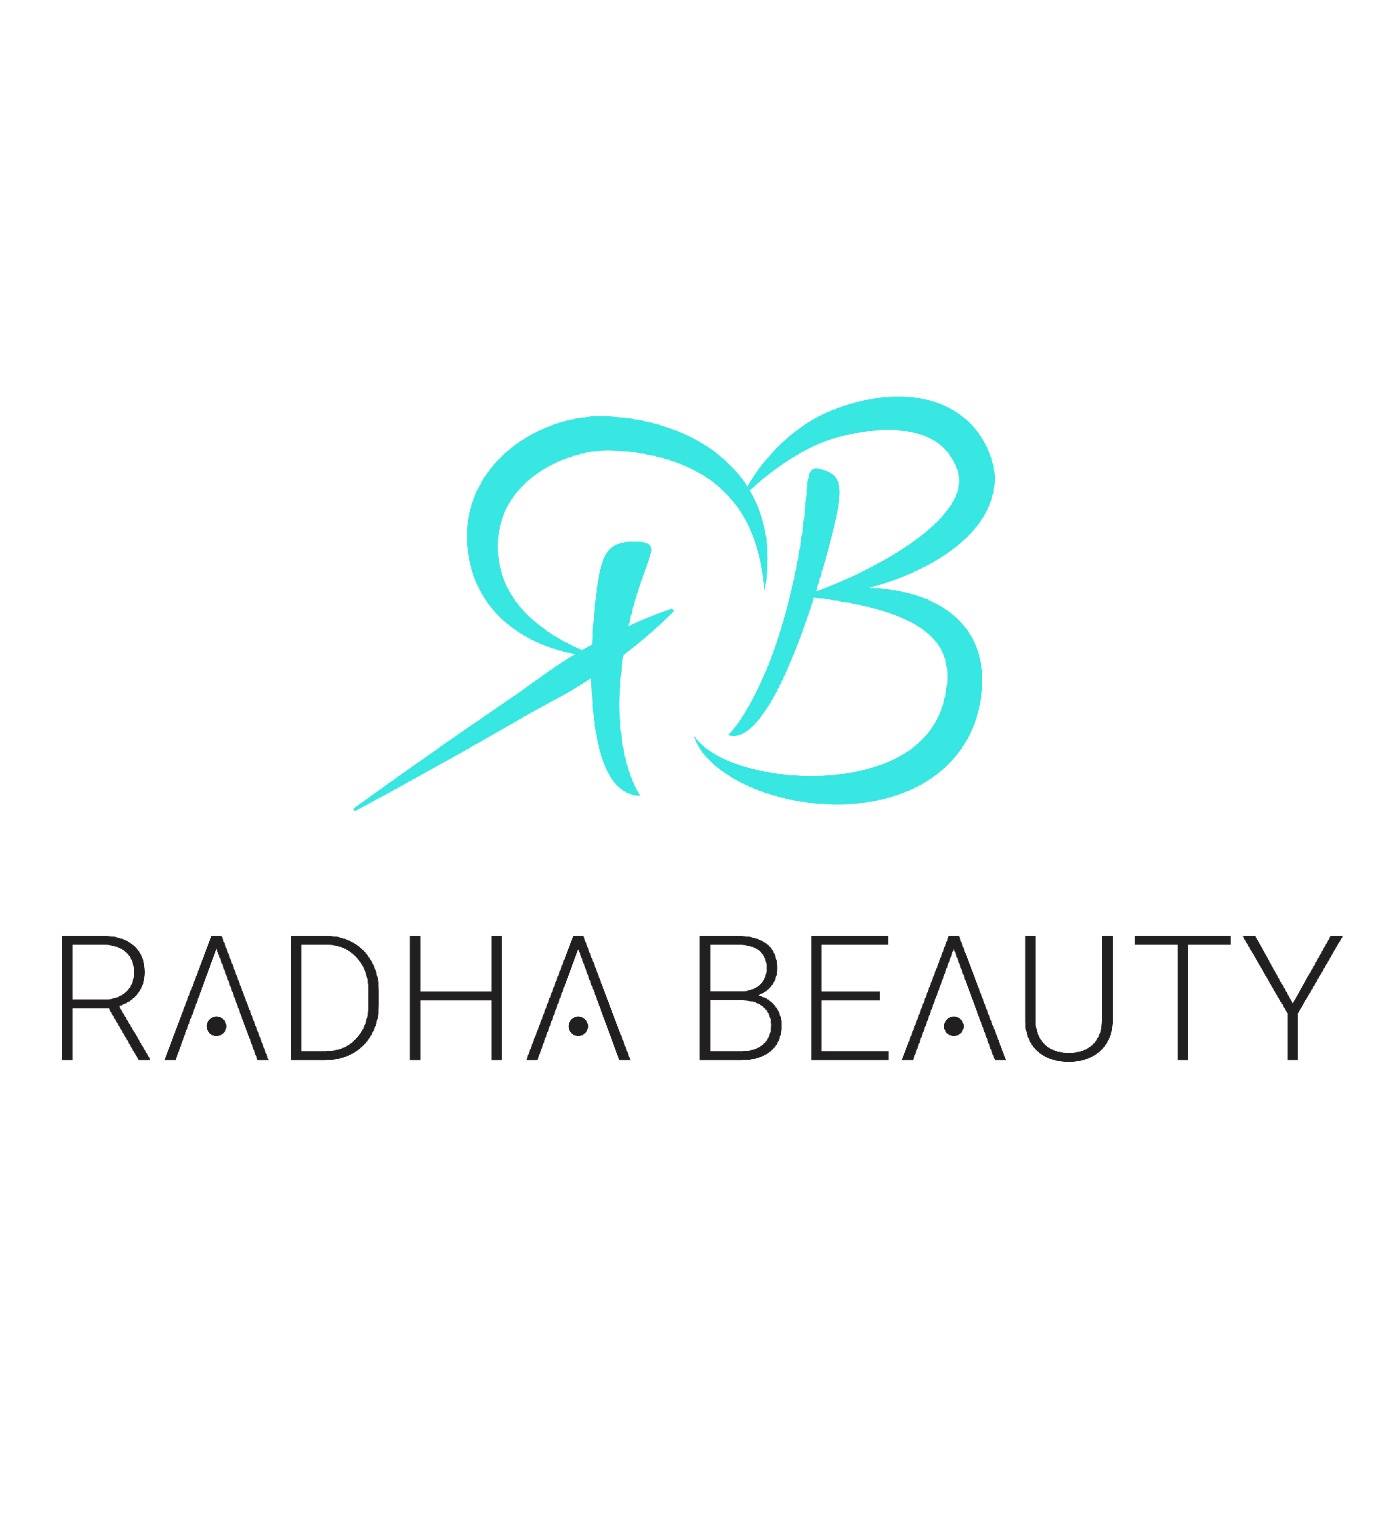 Radha Beauty